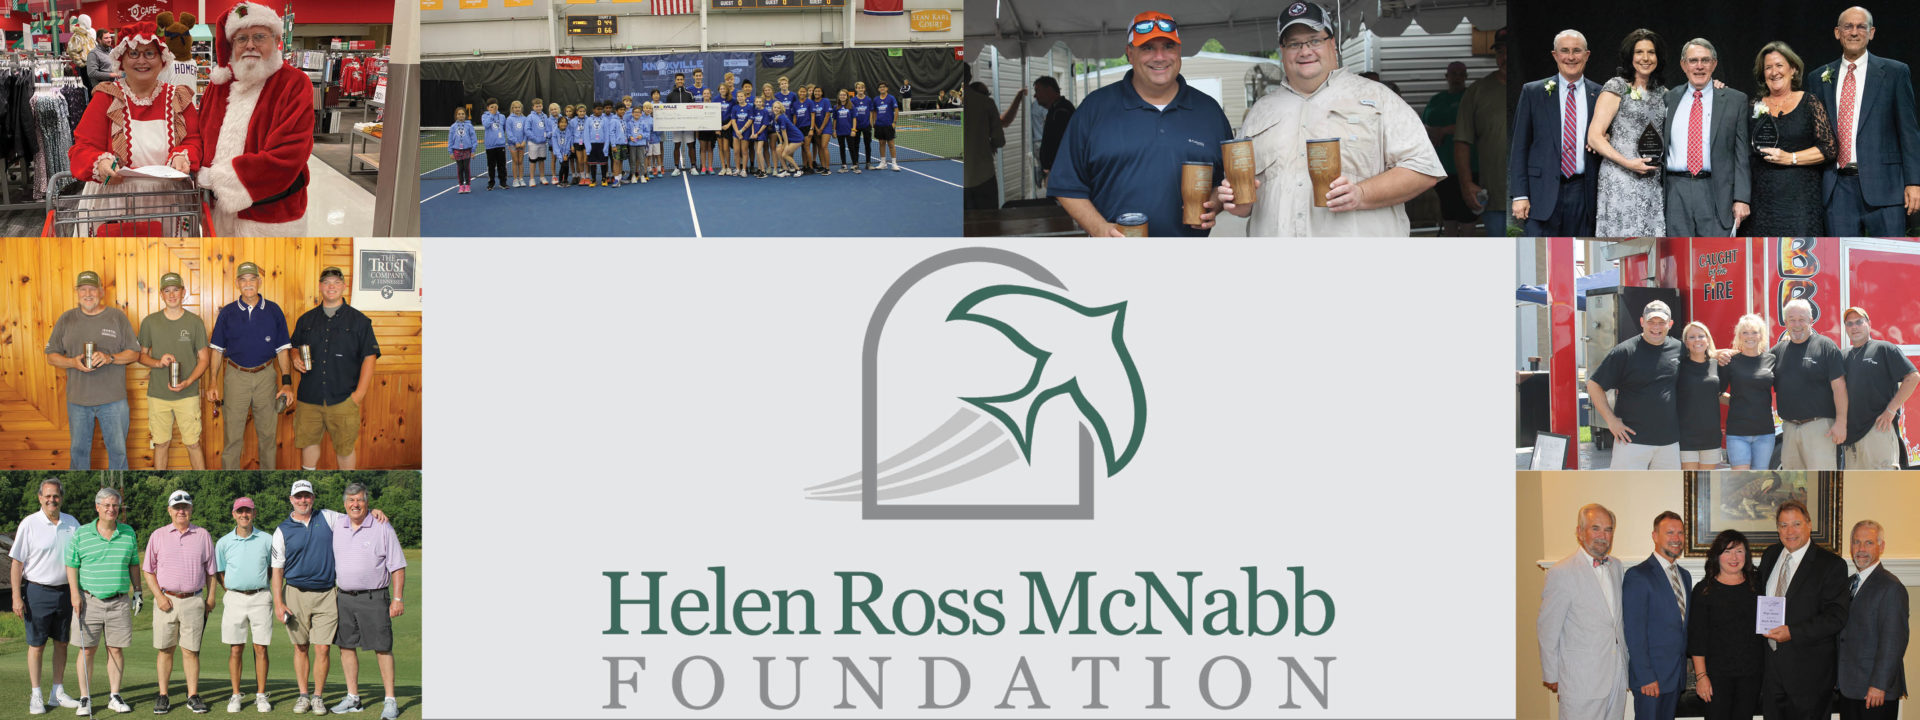 Helen Ross McNabb Foundation